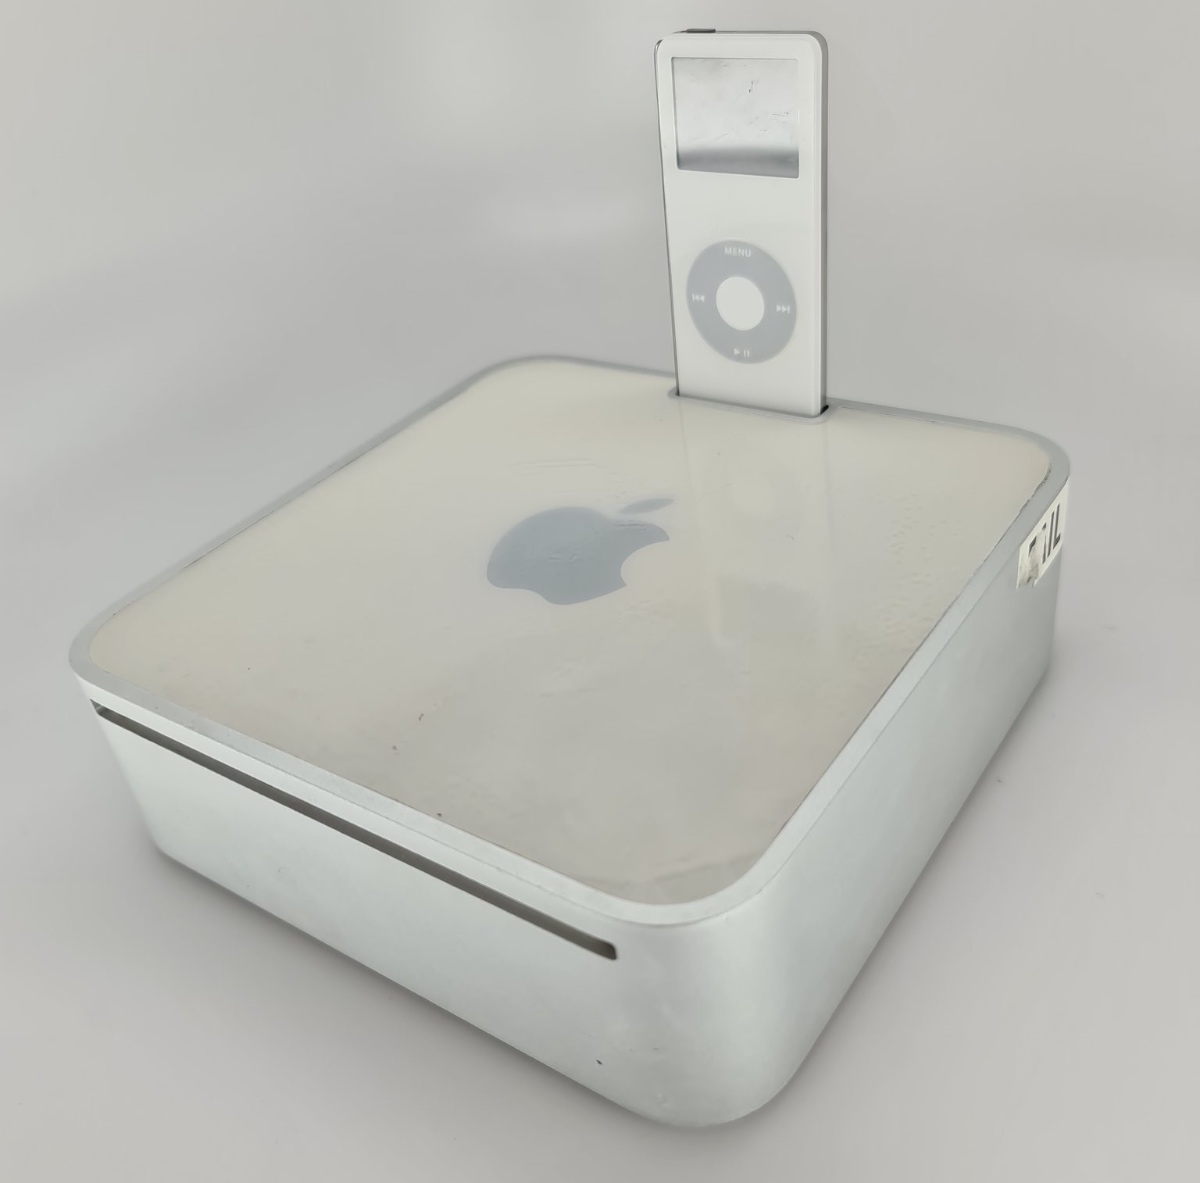 В сети появились фото редкого прототипа Mac mini с доком для iPod